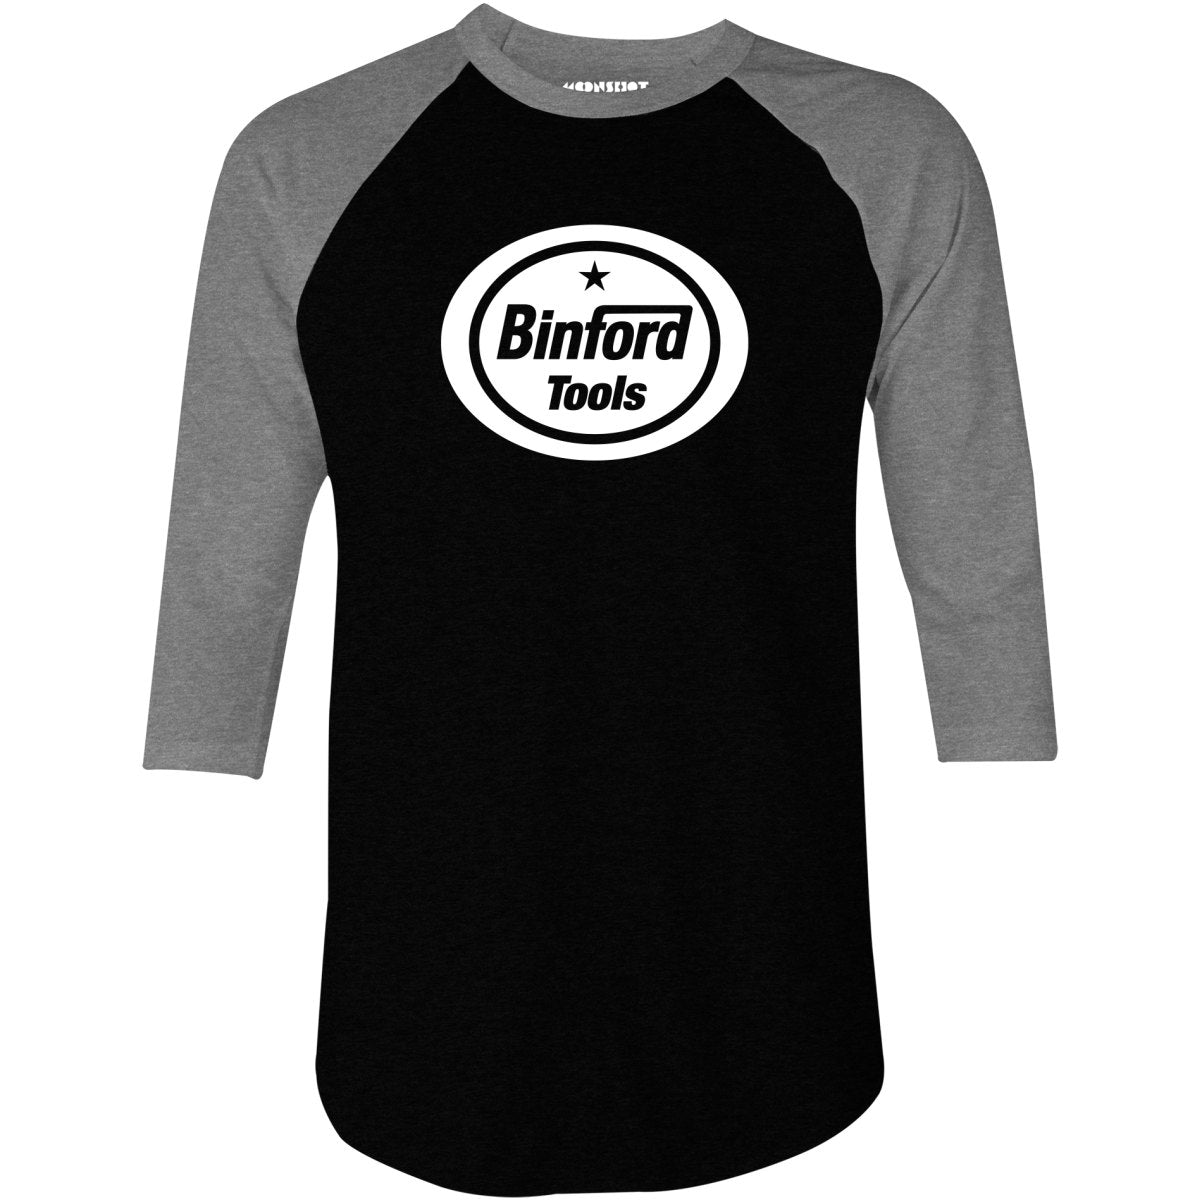 Binford Tools - 3/4 Sleeve Raglan T-Shirt